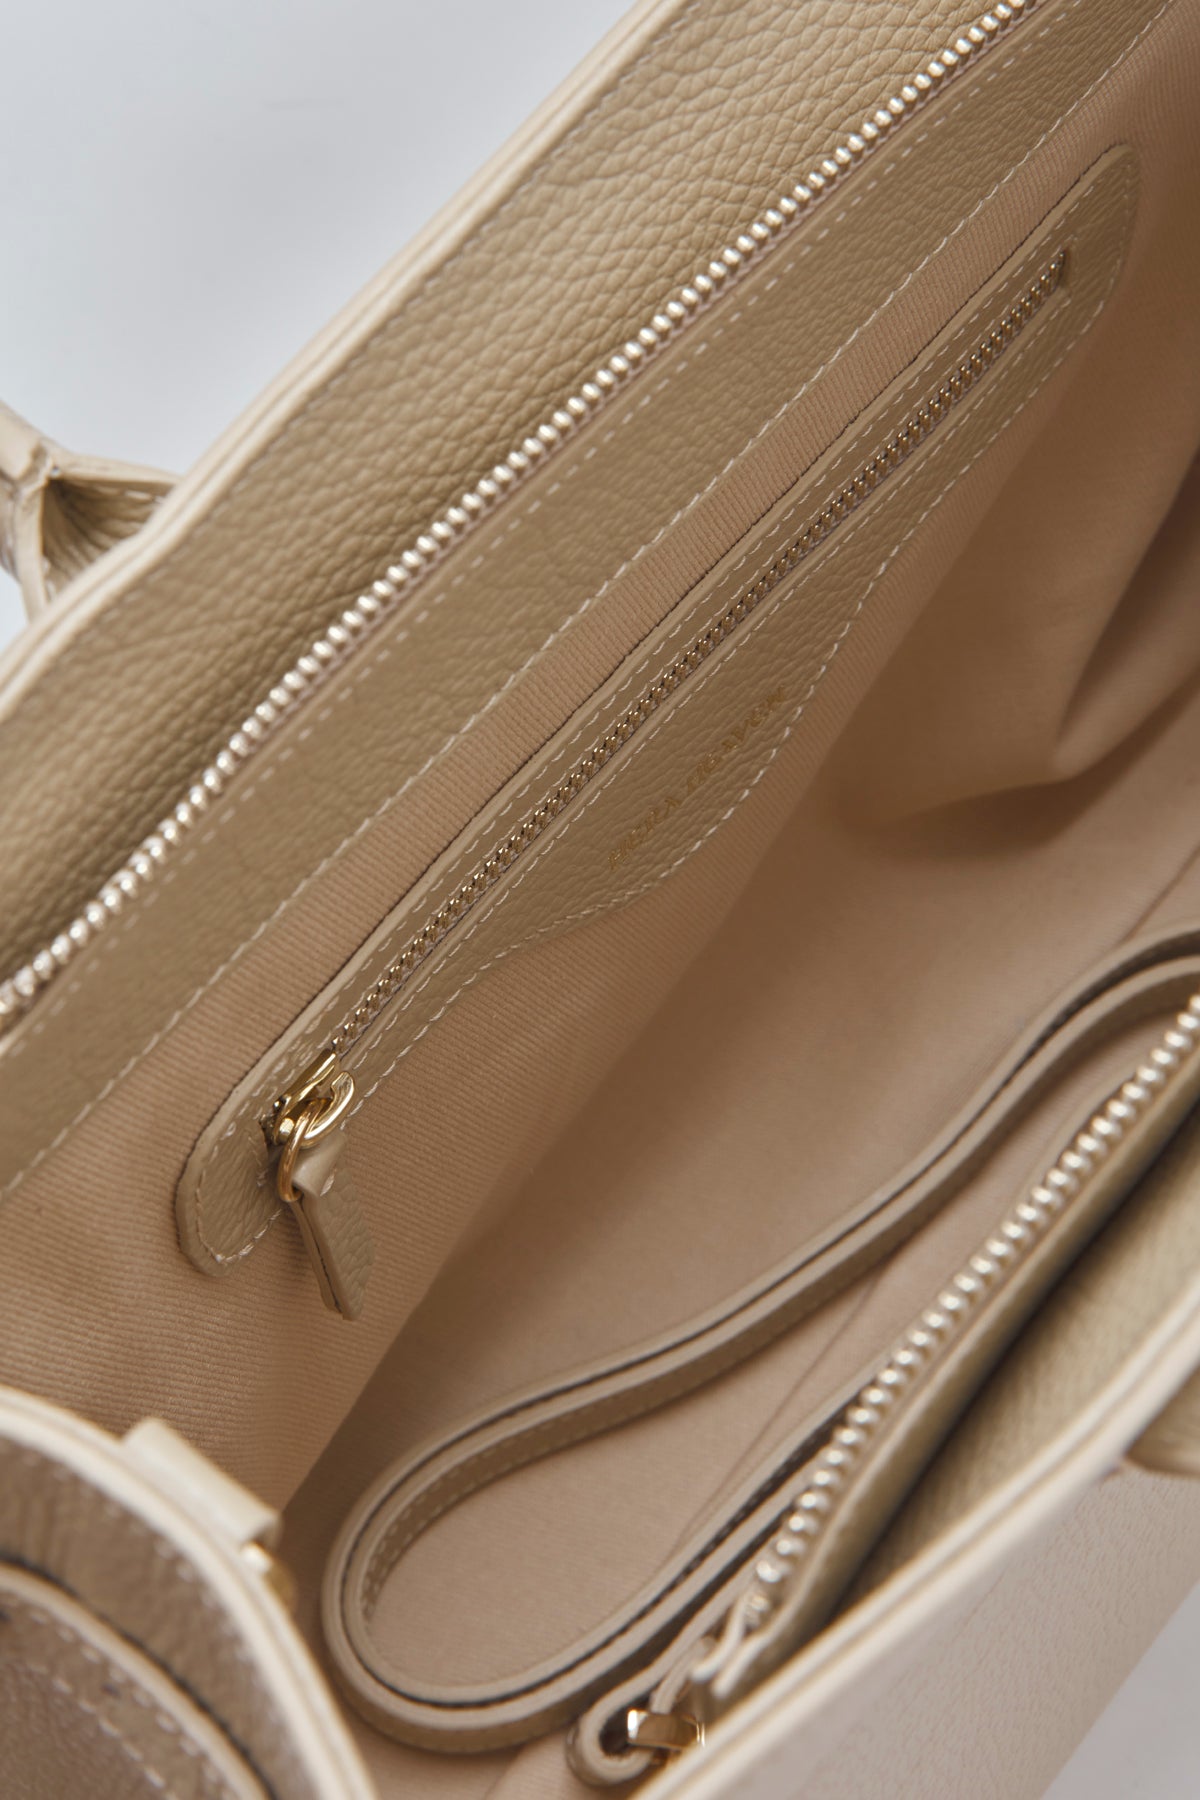 sand beige michael genuine leather women's tote bag inside